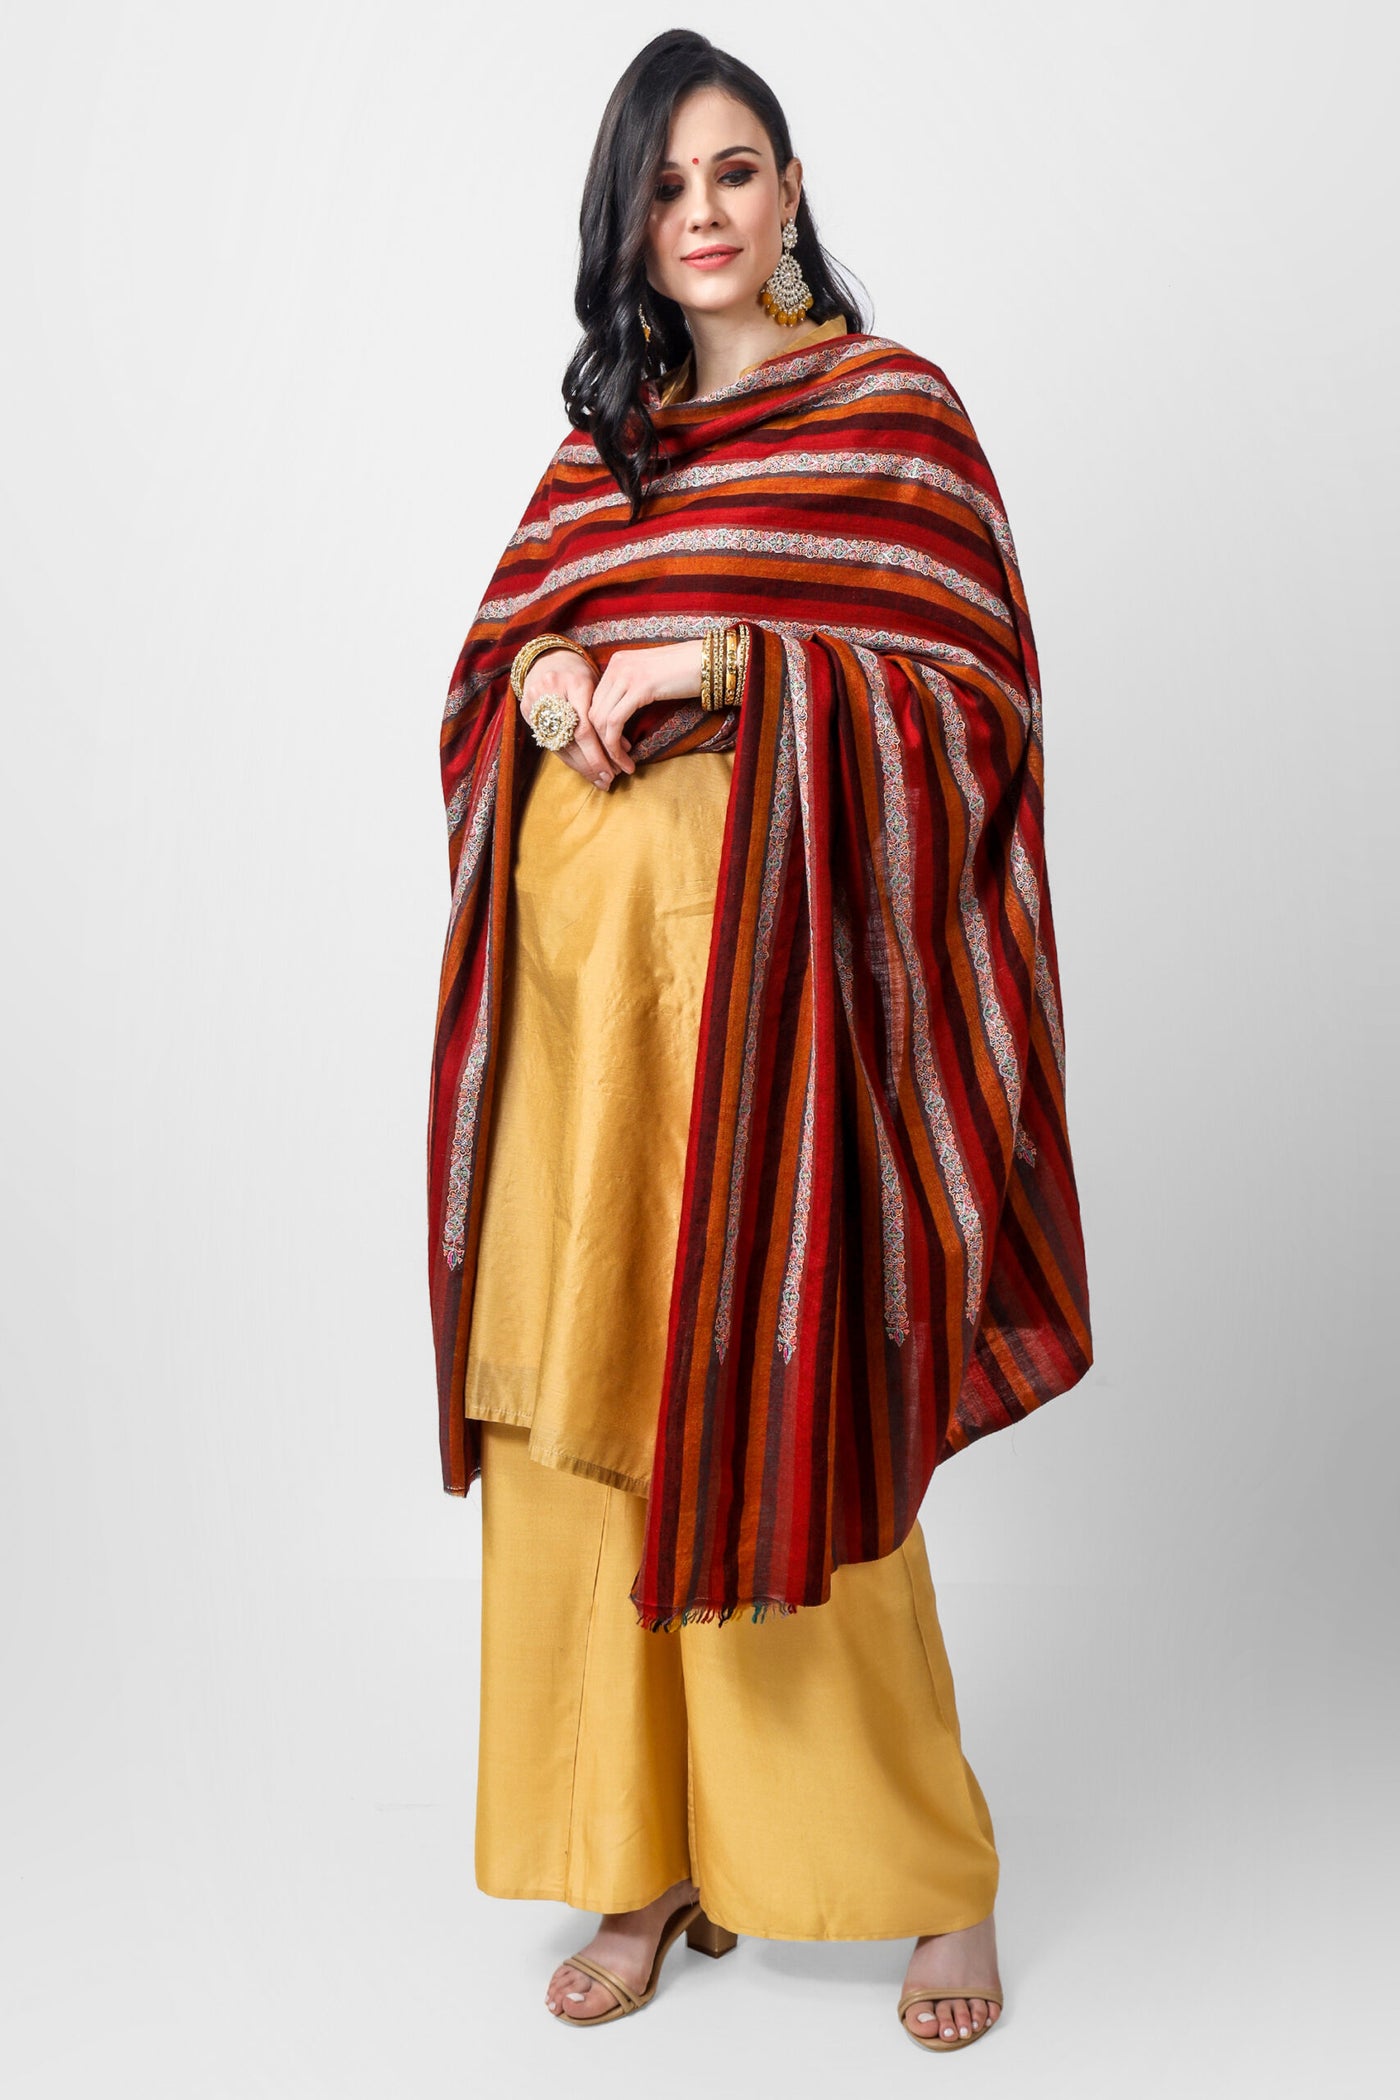 PASHMINA SHAWLS - Stripped maroon & brown sozni pashmina shawl